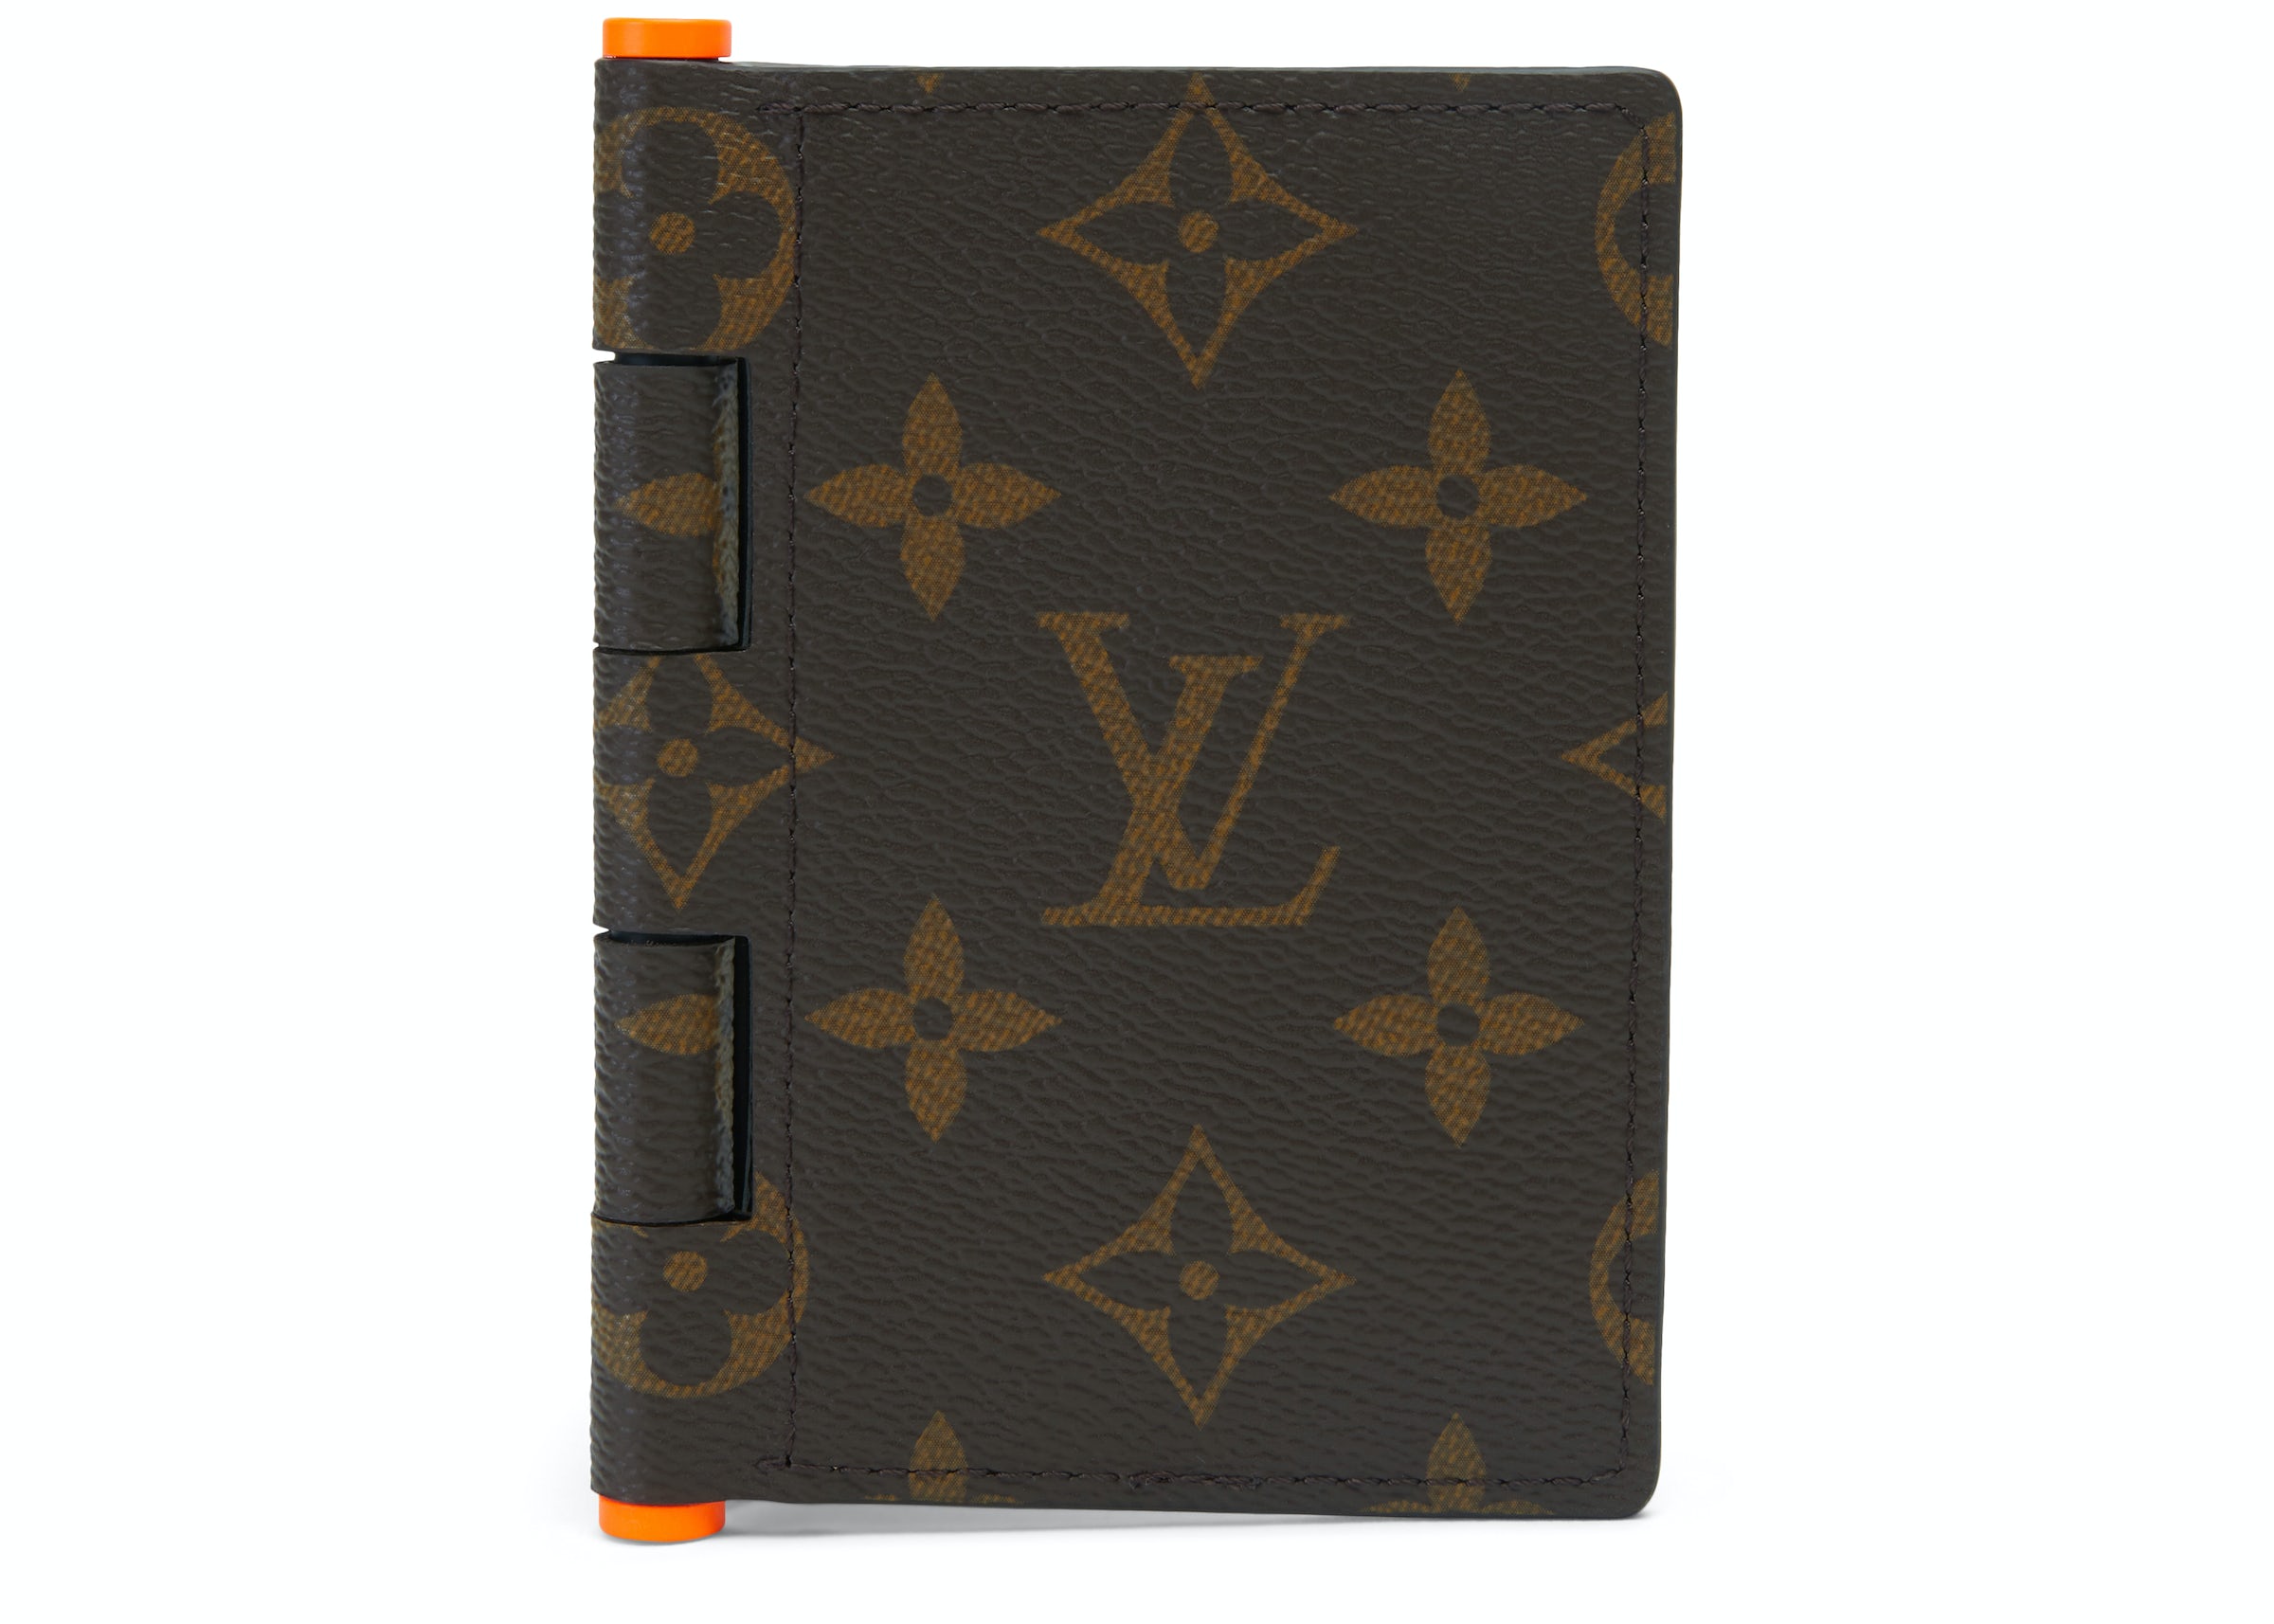 Louis Vuitton Pocket Agenda Cover Review + DIY & 4 Potential Uses